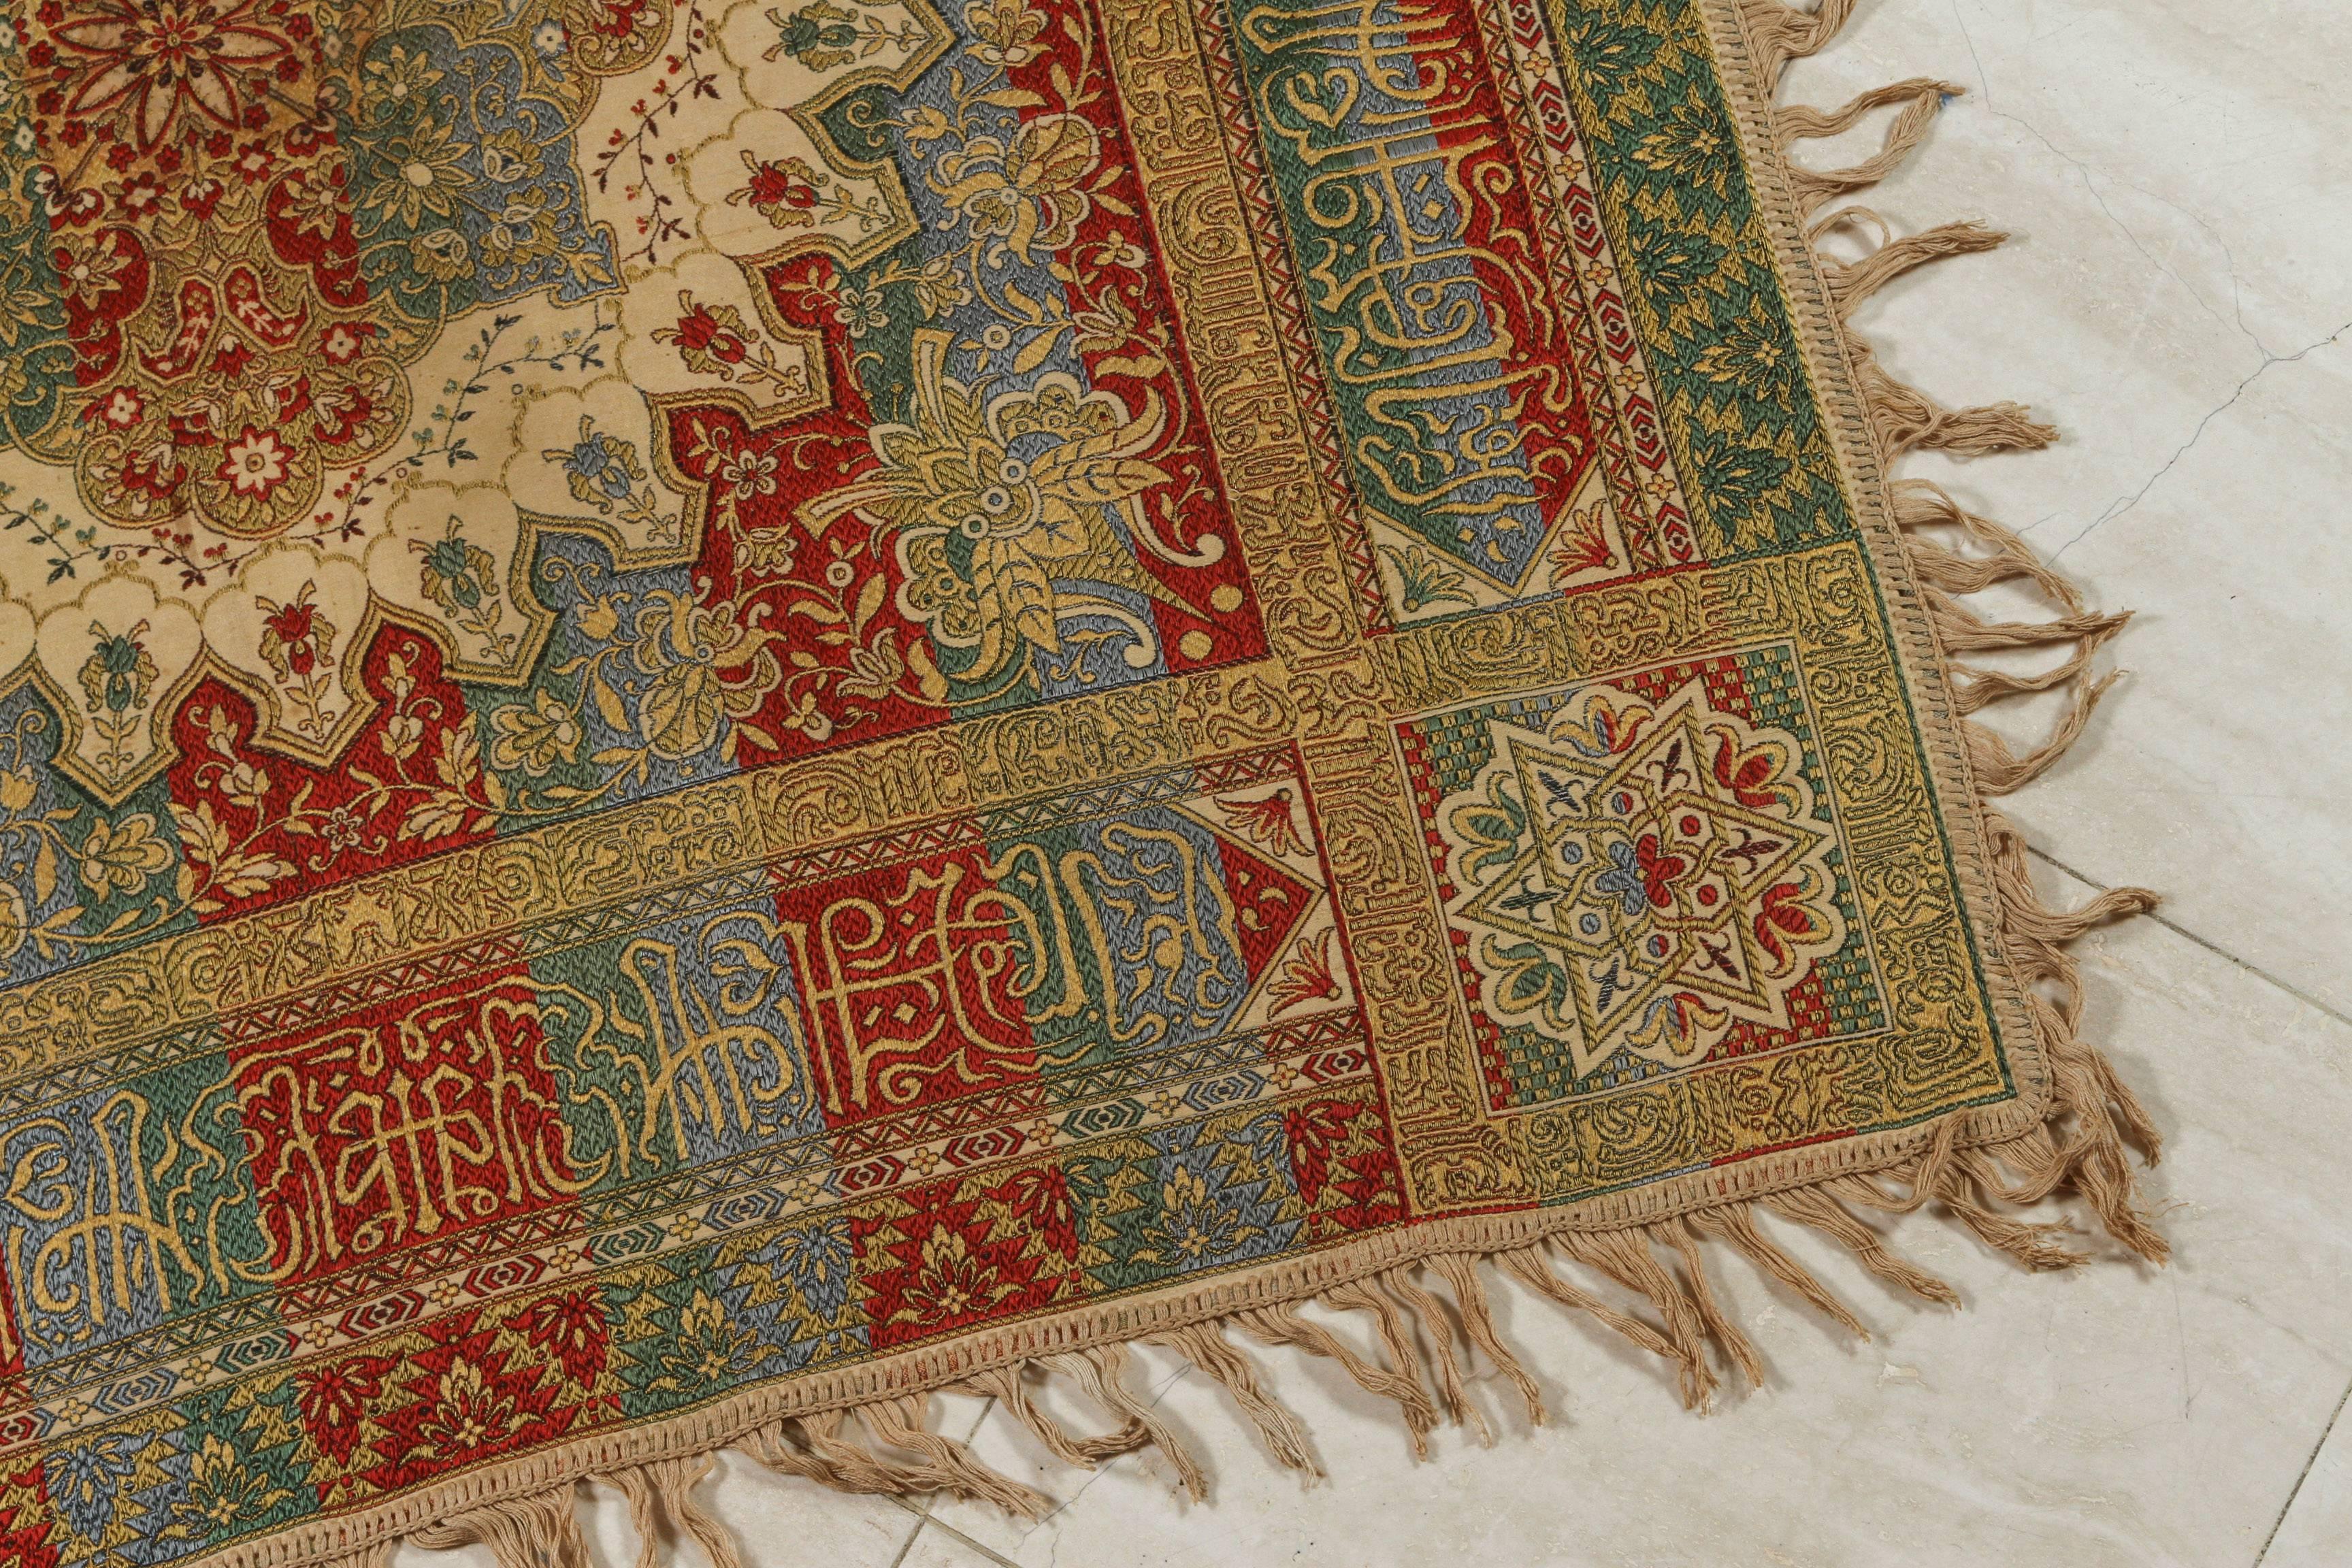 20th Century Granada Islamic Spain Moorish Textile with Arabic Calligraphy Writing